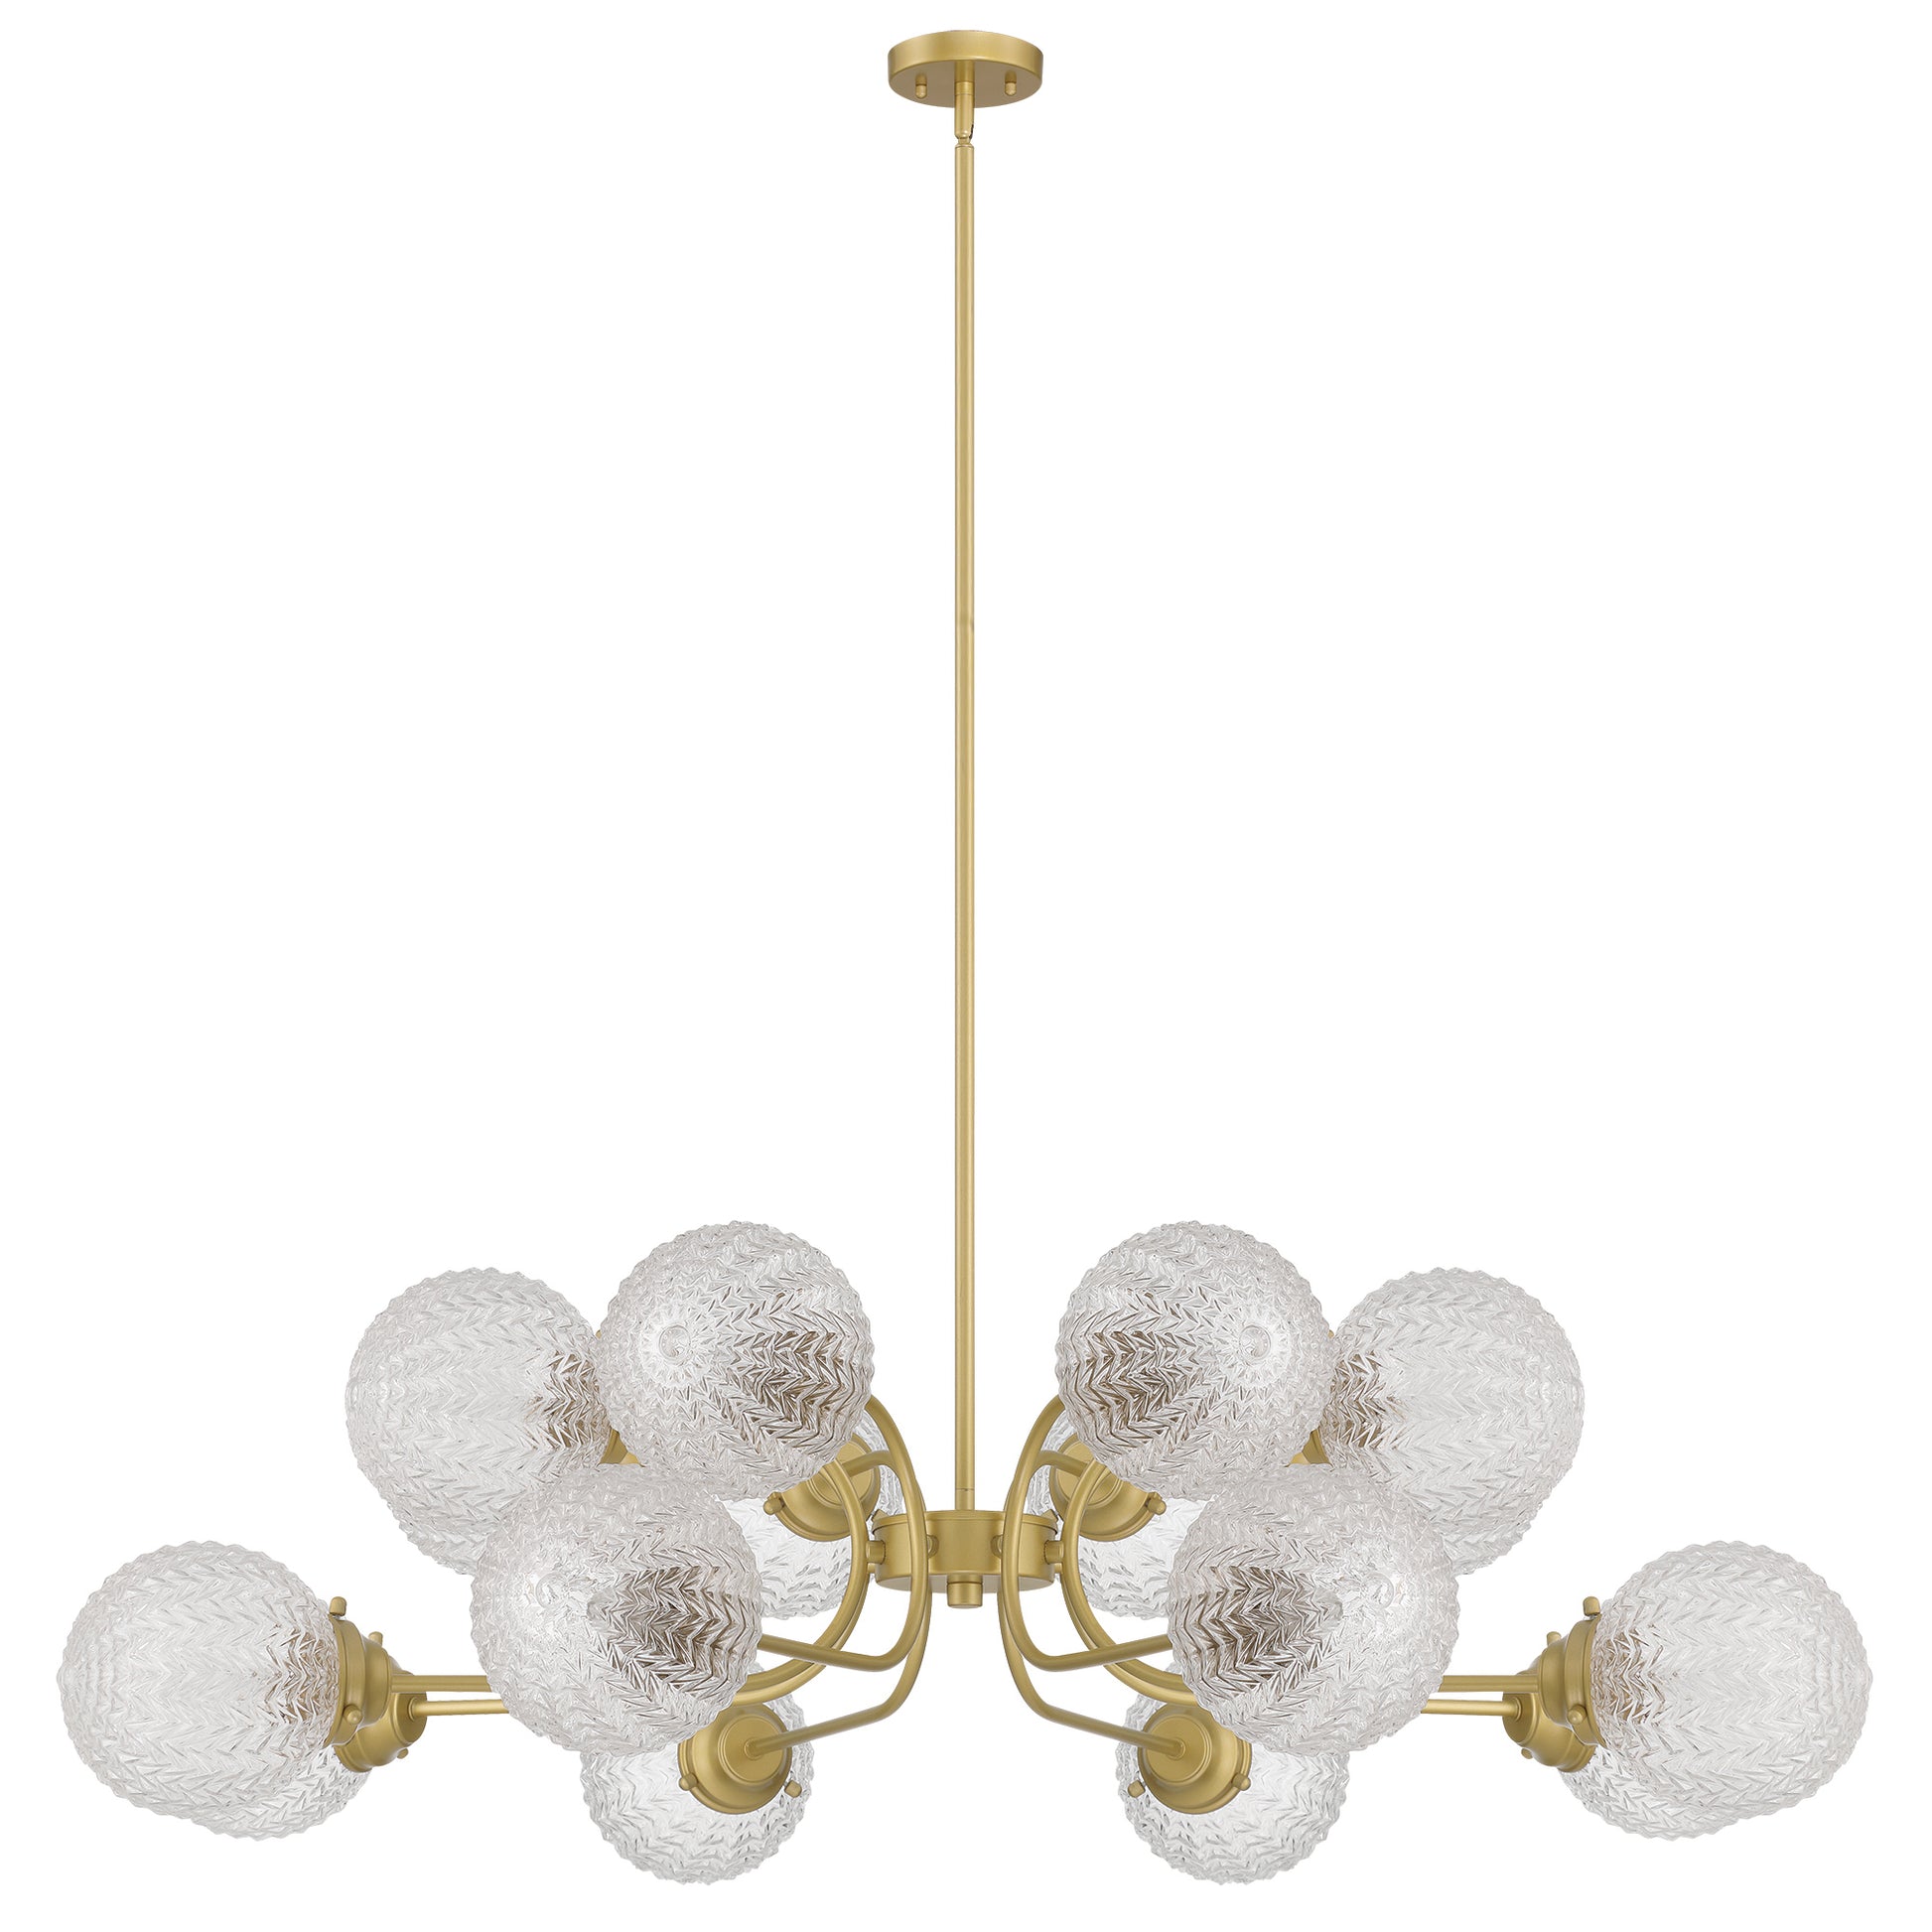 16 light sputnik empire chandelier (6) by ACROMA